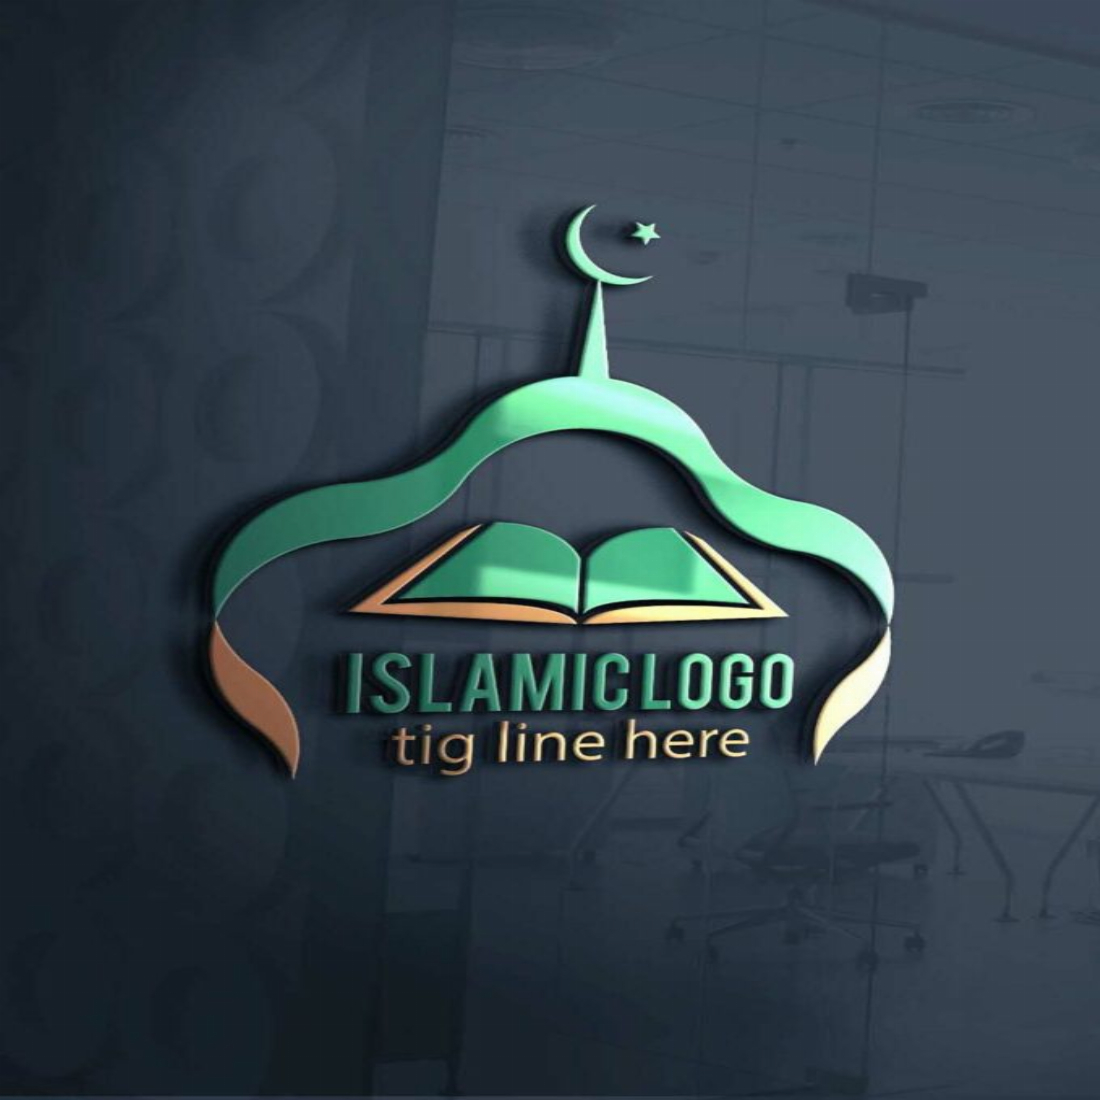 Islamic logo sell cover image.